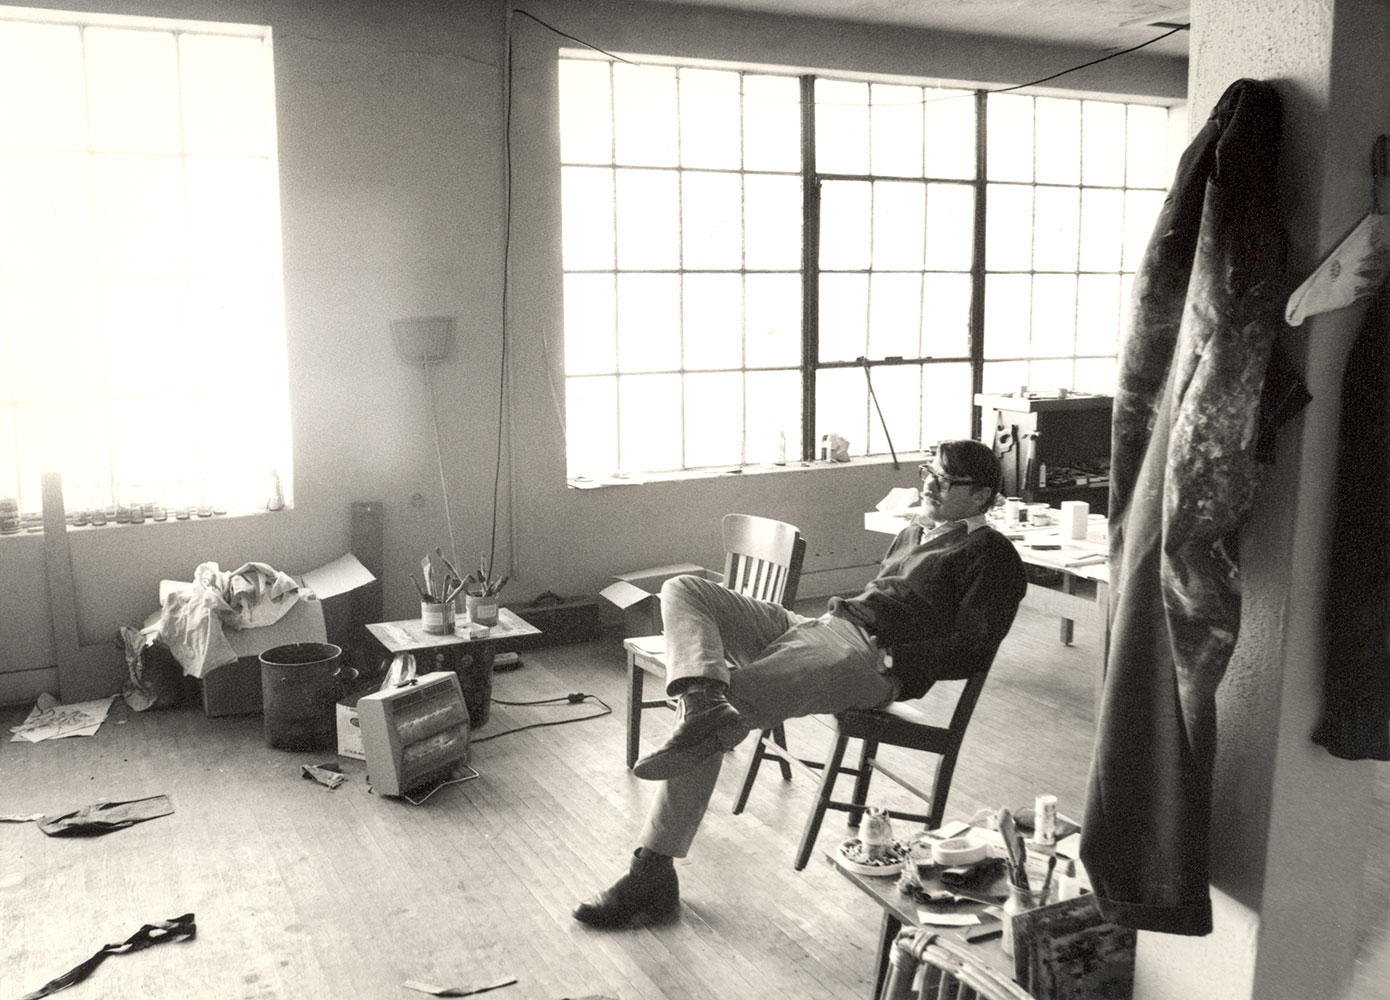 Portrait of Richard  Diebenkorn. Richard Diebenkorn in his studio at Ashland Avenue and Main St, Santa Monica, CA, c. 1970.<br>Photograph by Richard M. Grant.